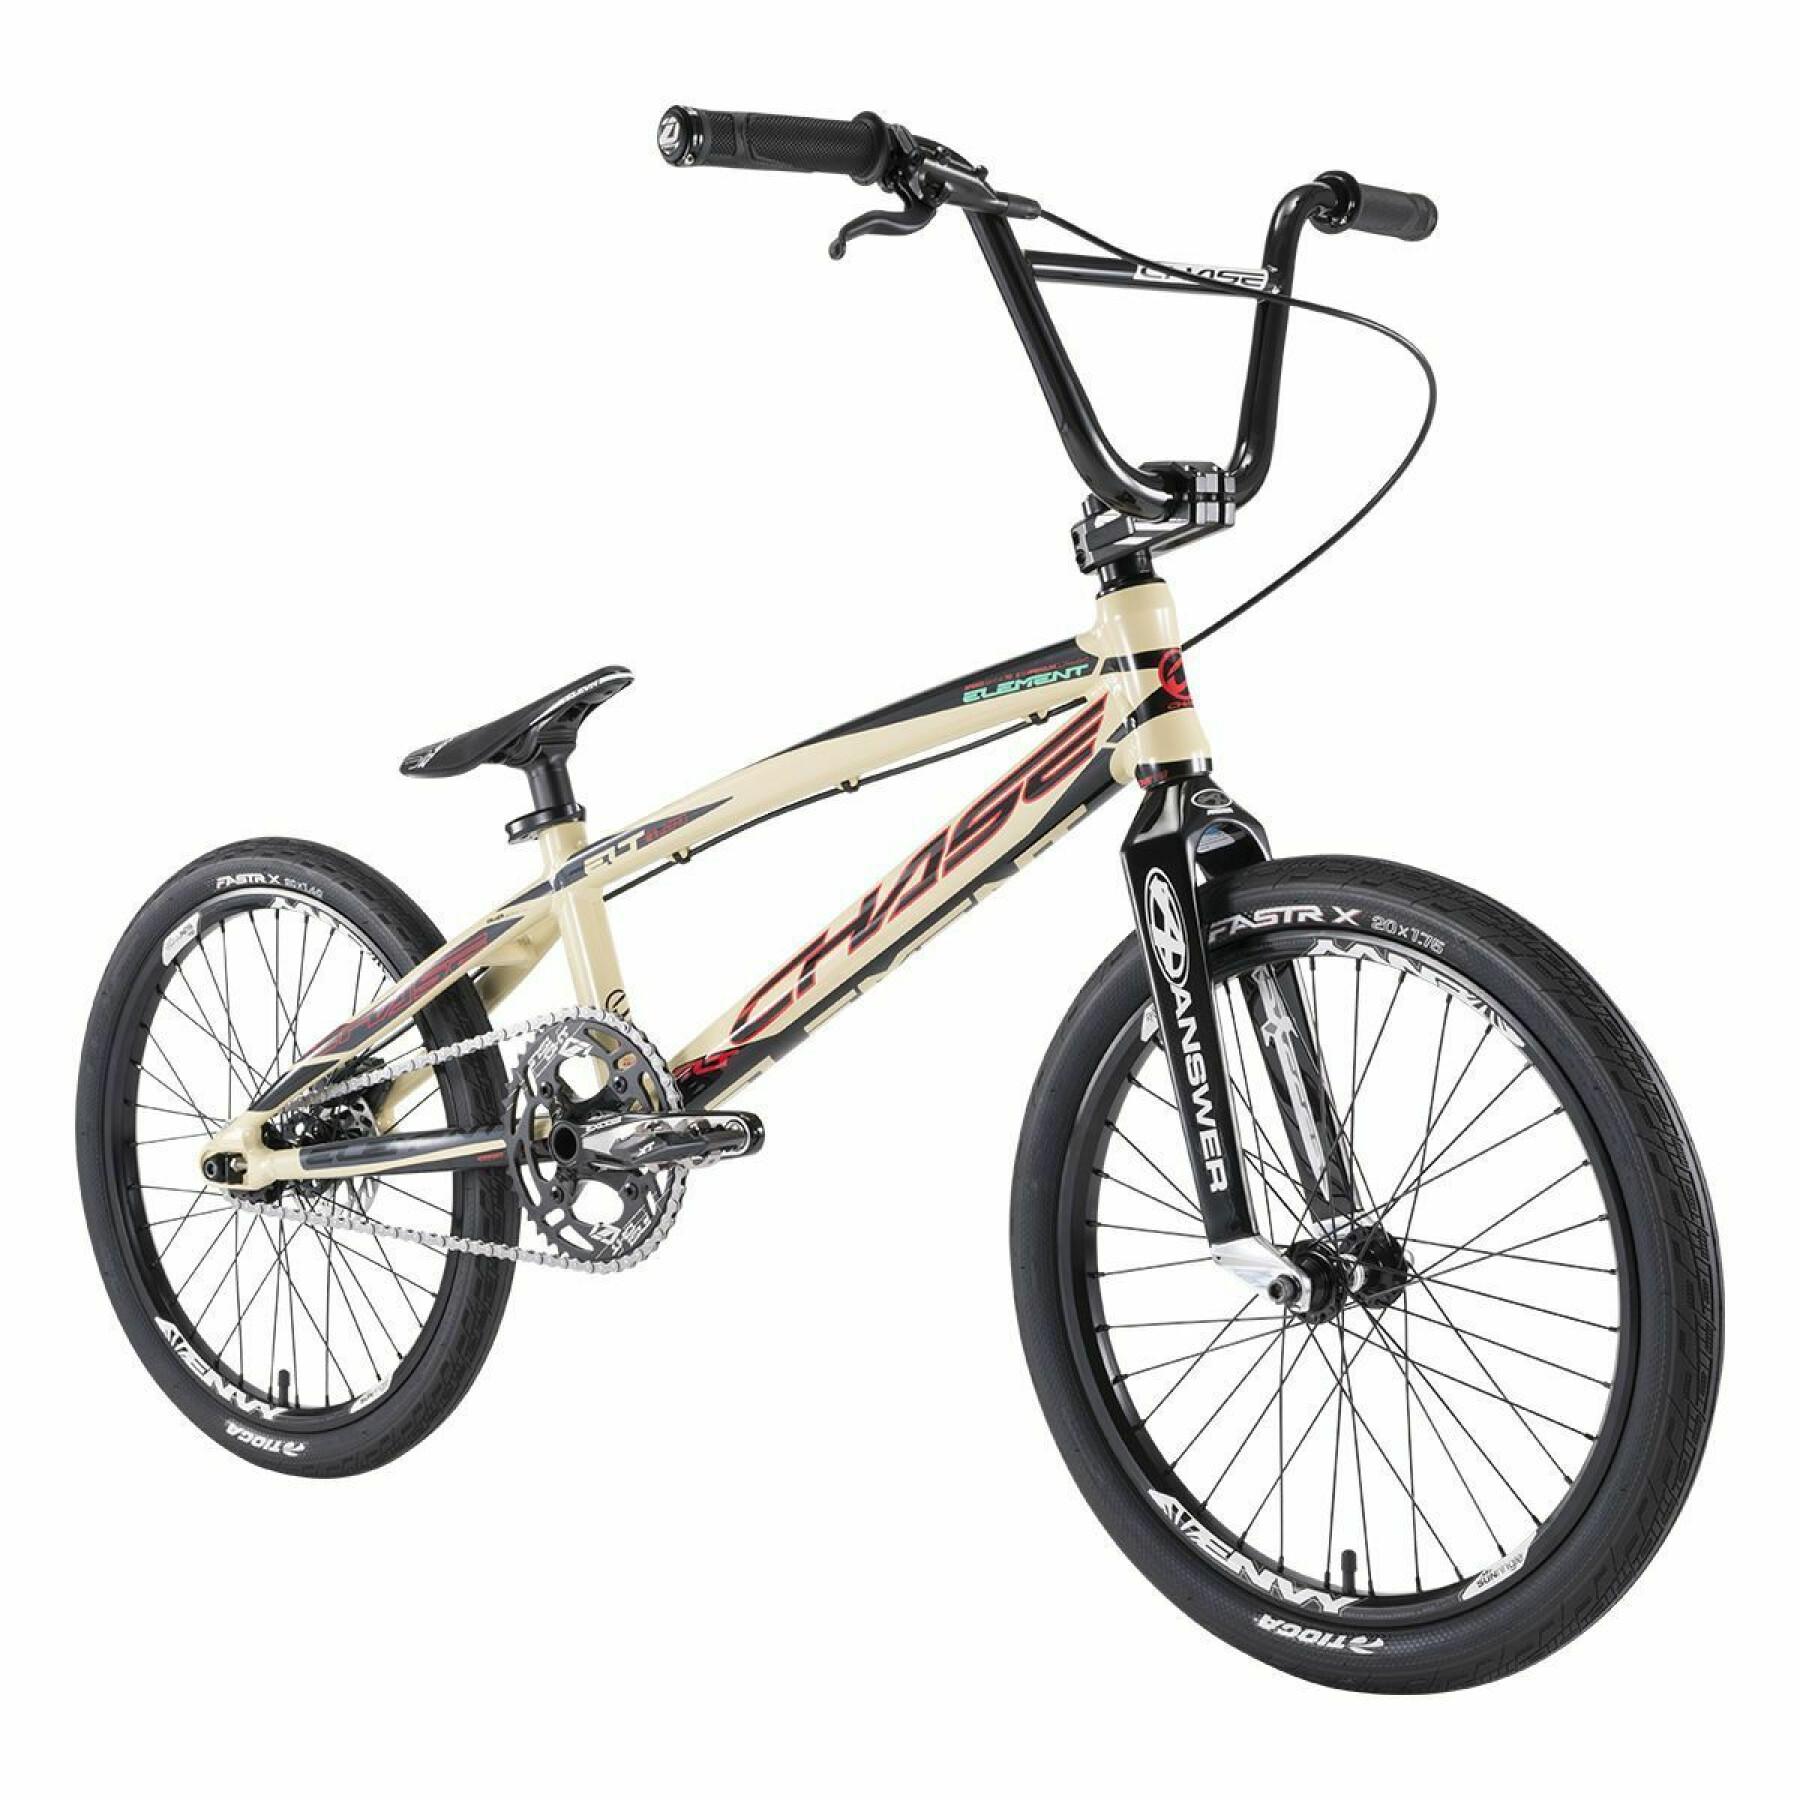 Bicicletta Chase element 2021 Pro XL